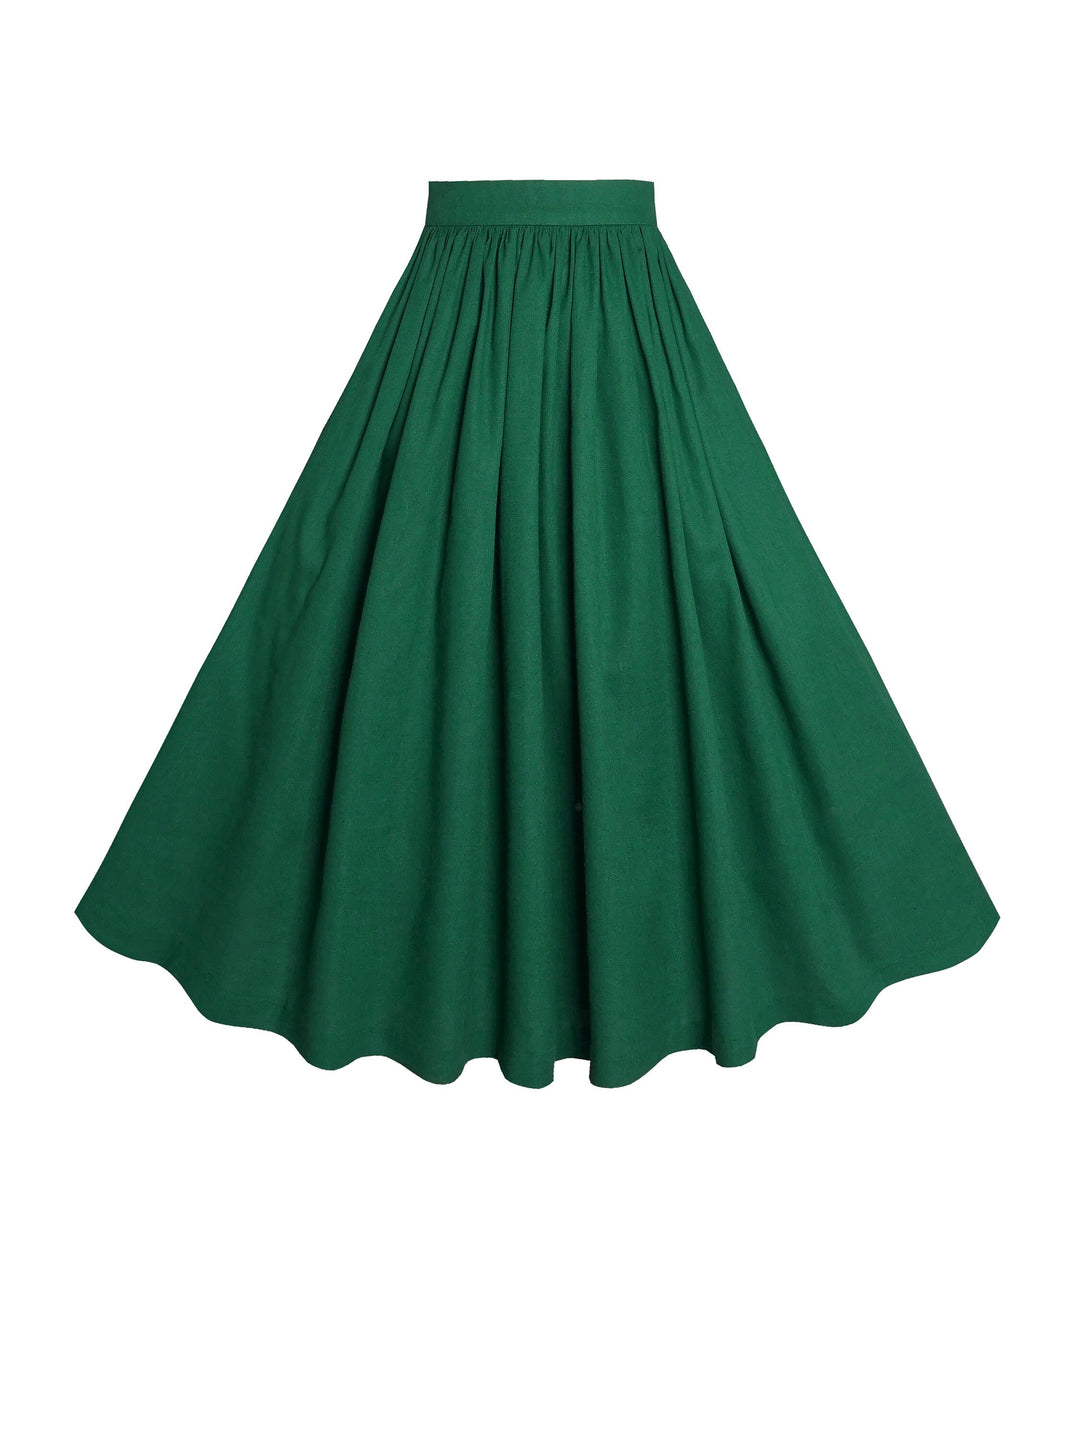 MTO - Lola Skirt in Forest Green Linen